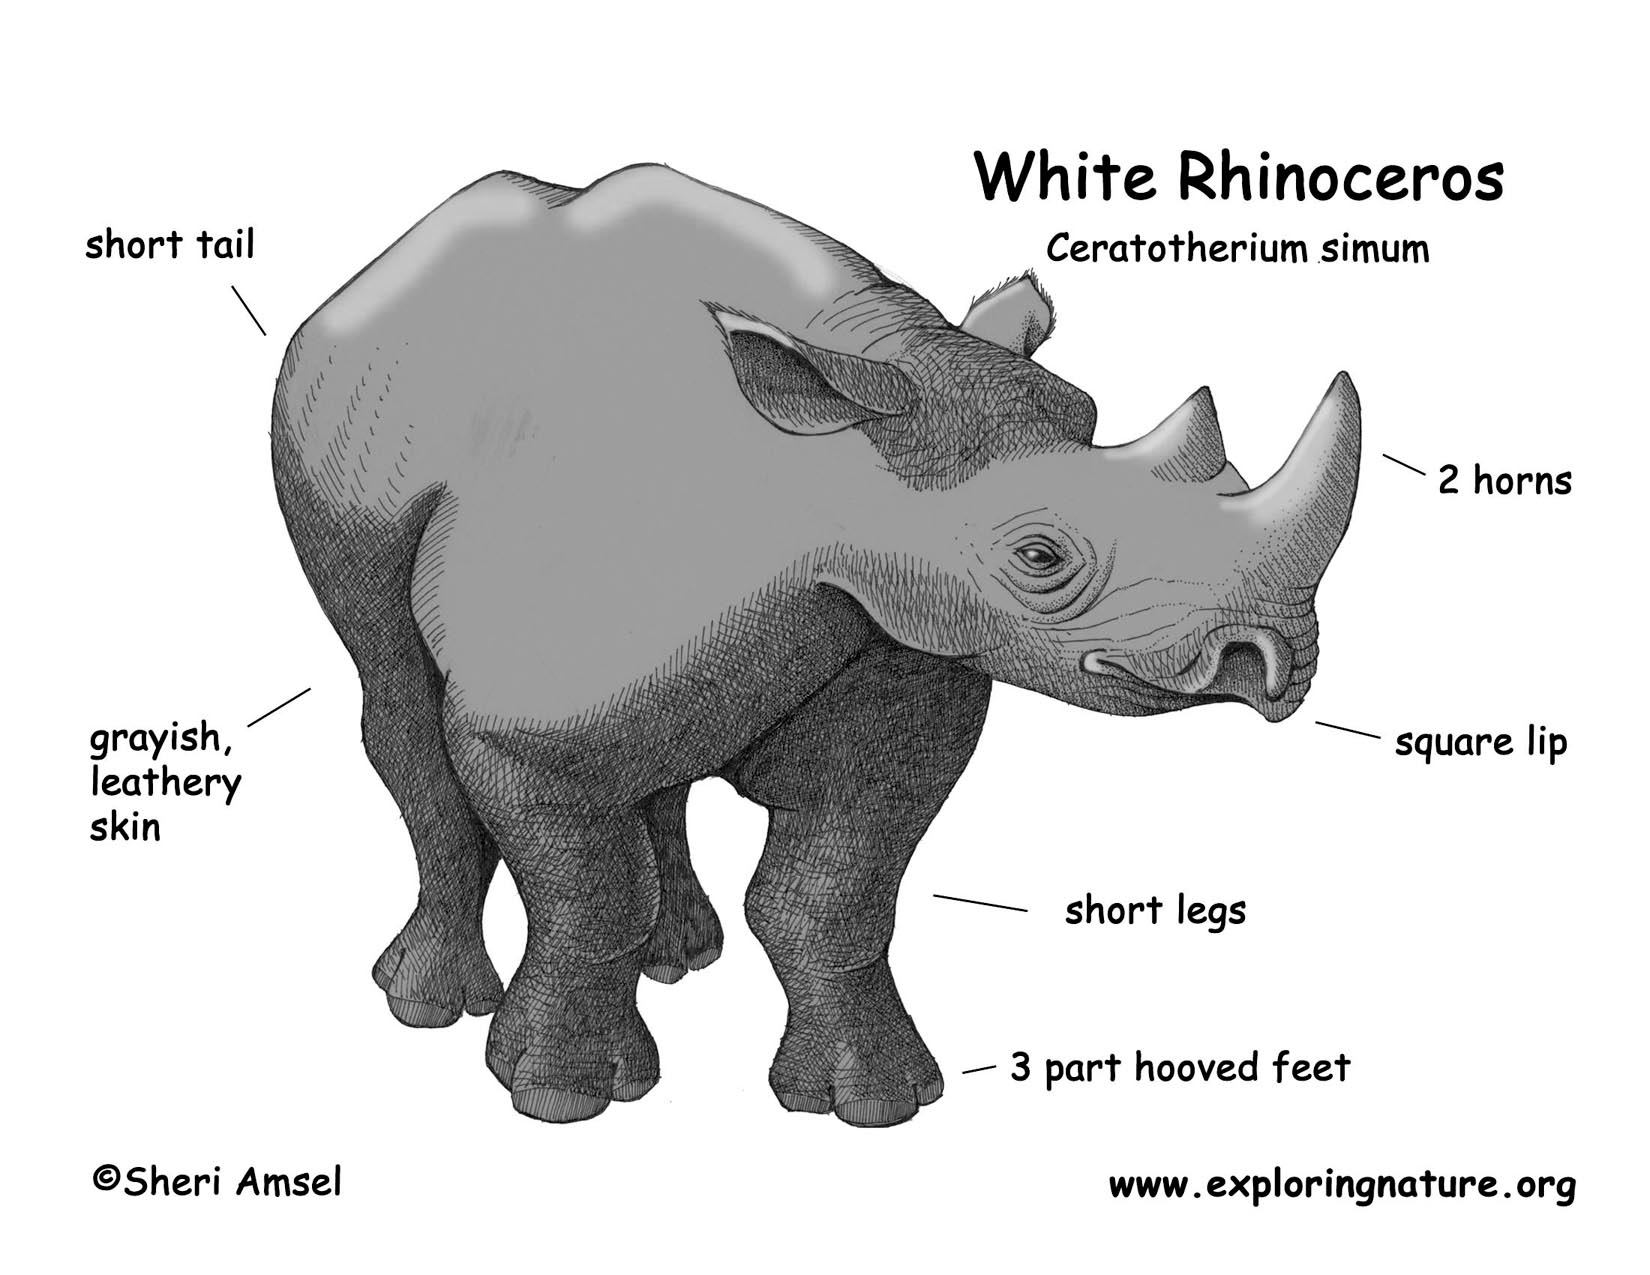 Rhinoceros (White)